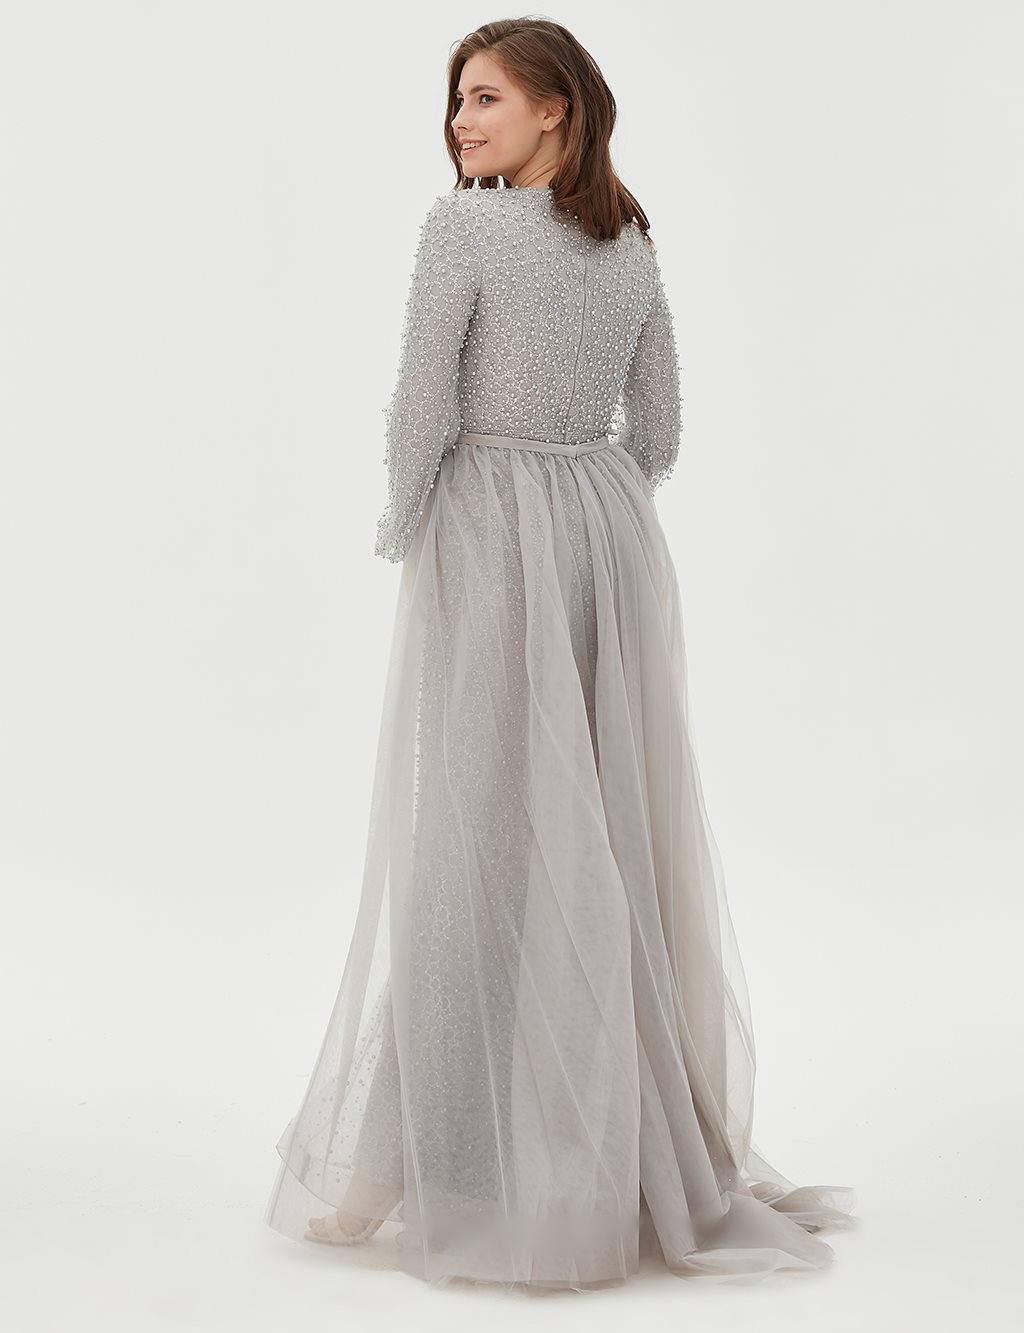 TIARA Pearl Detailed Evening Gown B9 26017 Grey